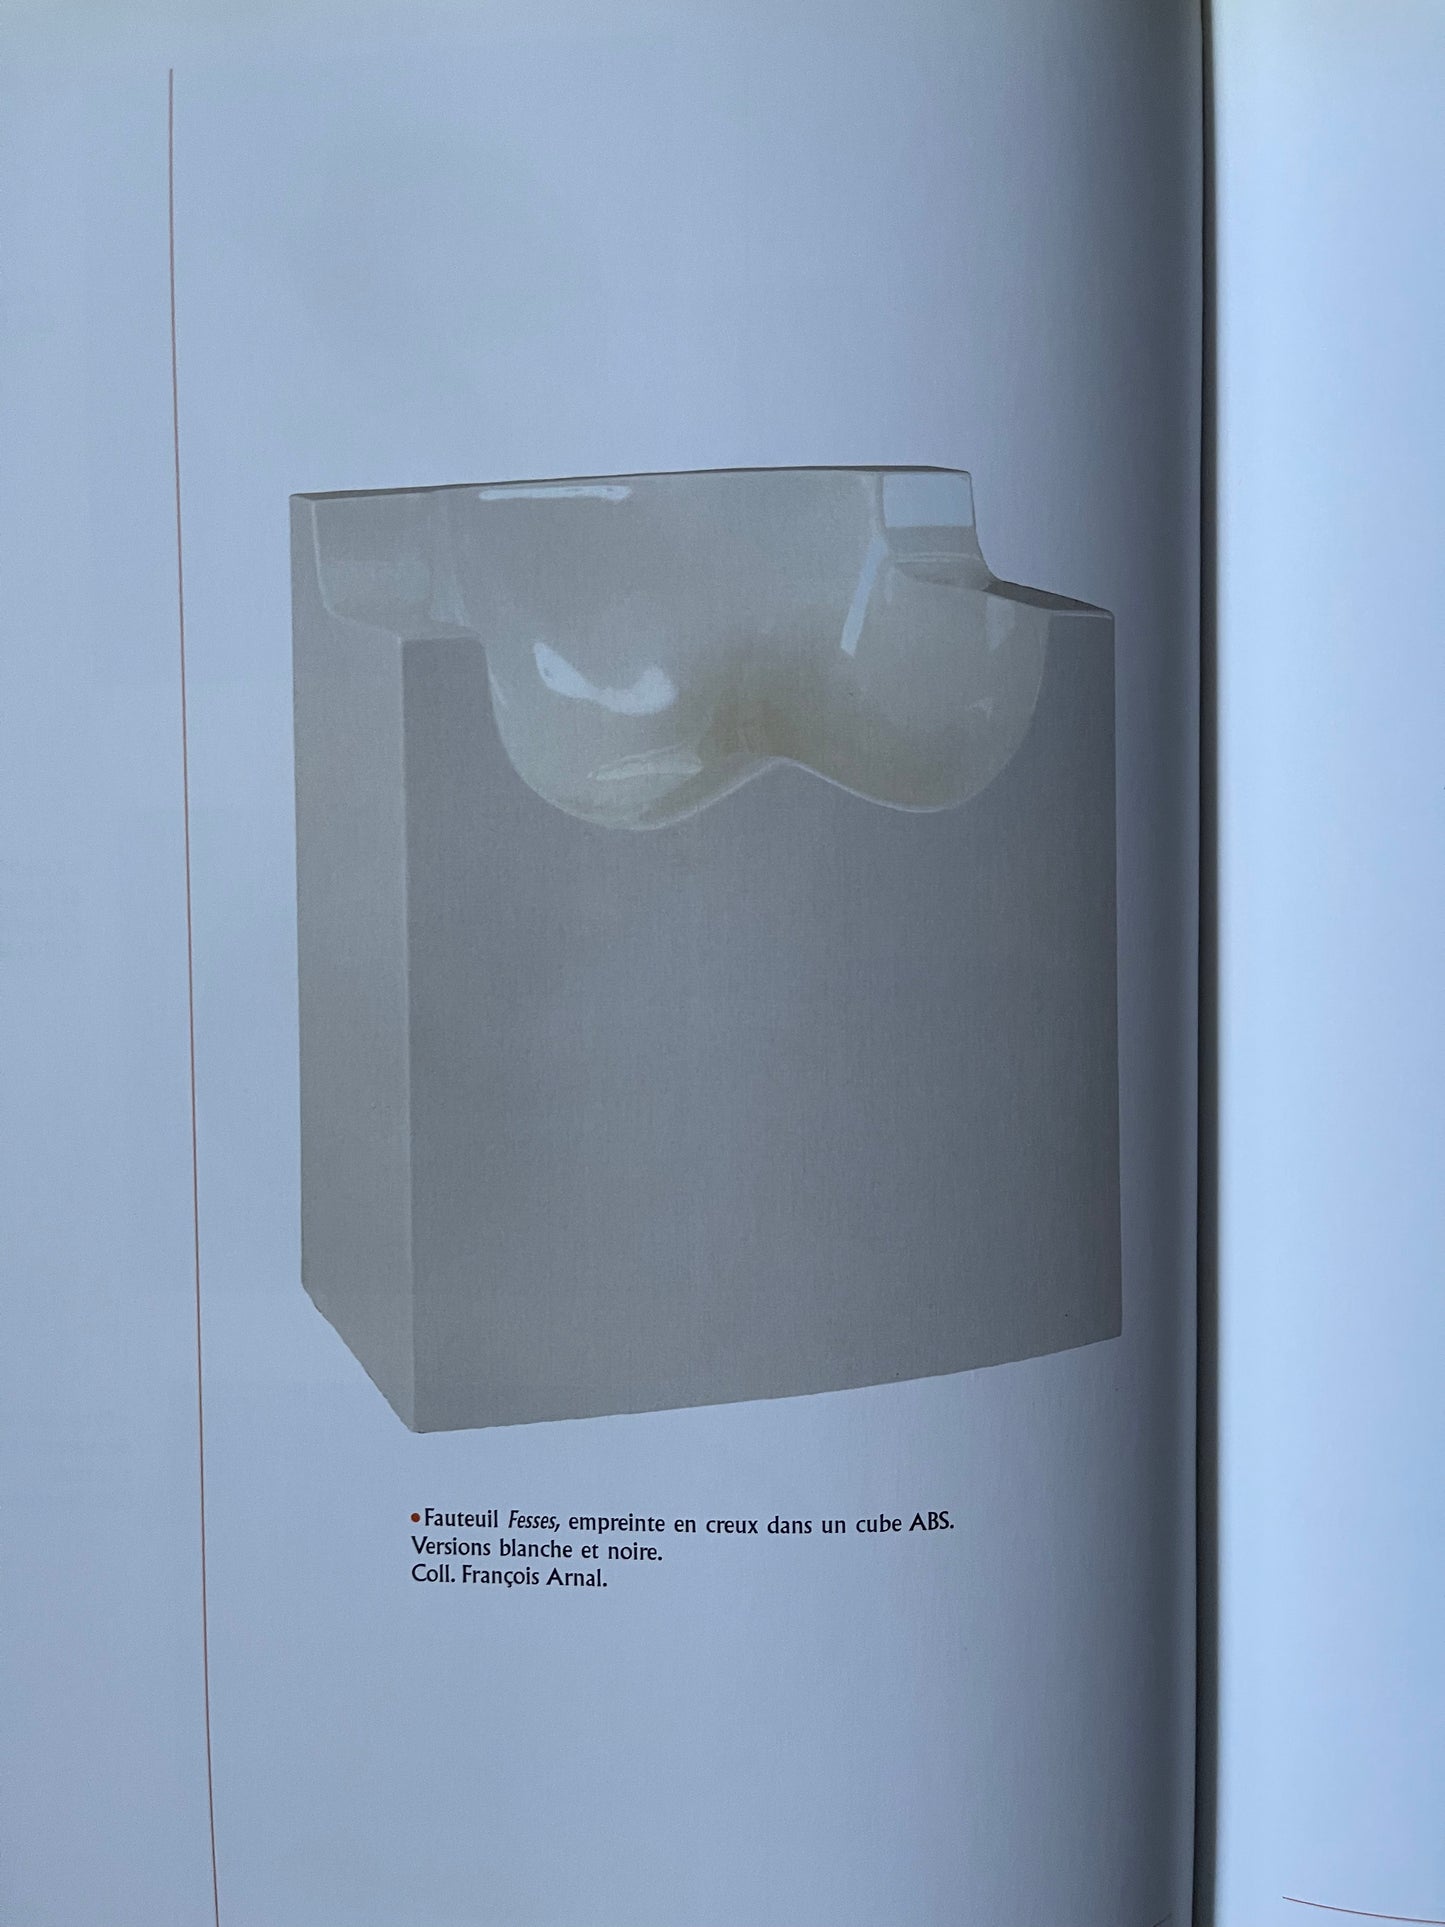 Atelier A: Rancontre de l'Art et de l'Objet, Kneebone/Braunstein, 2003